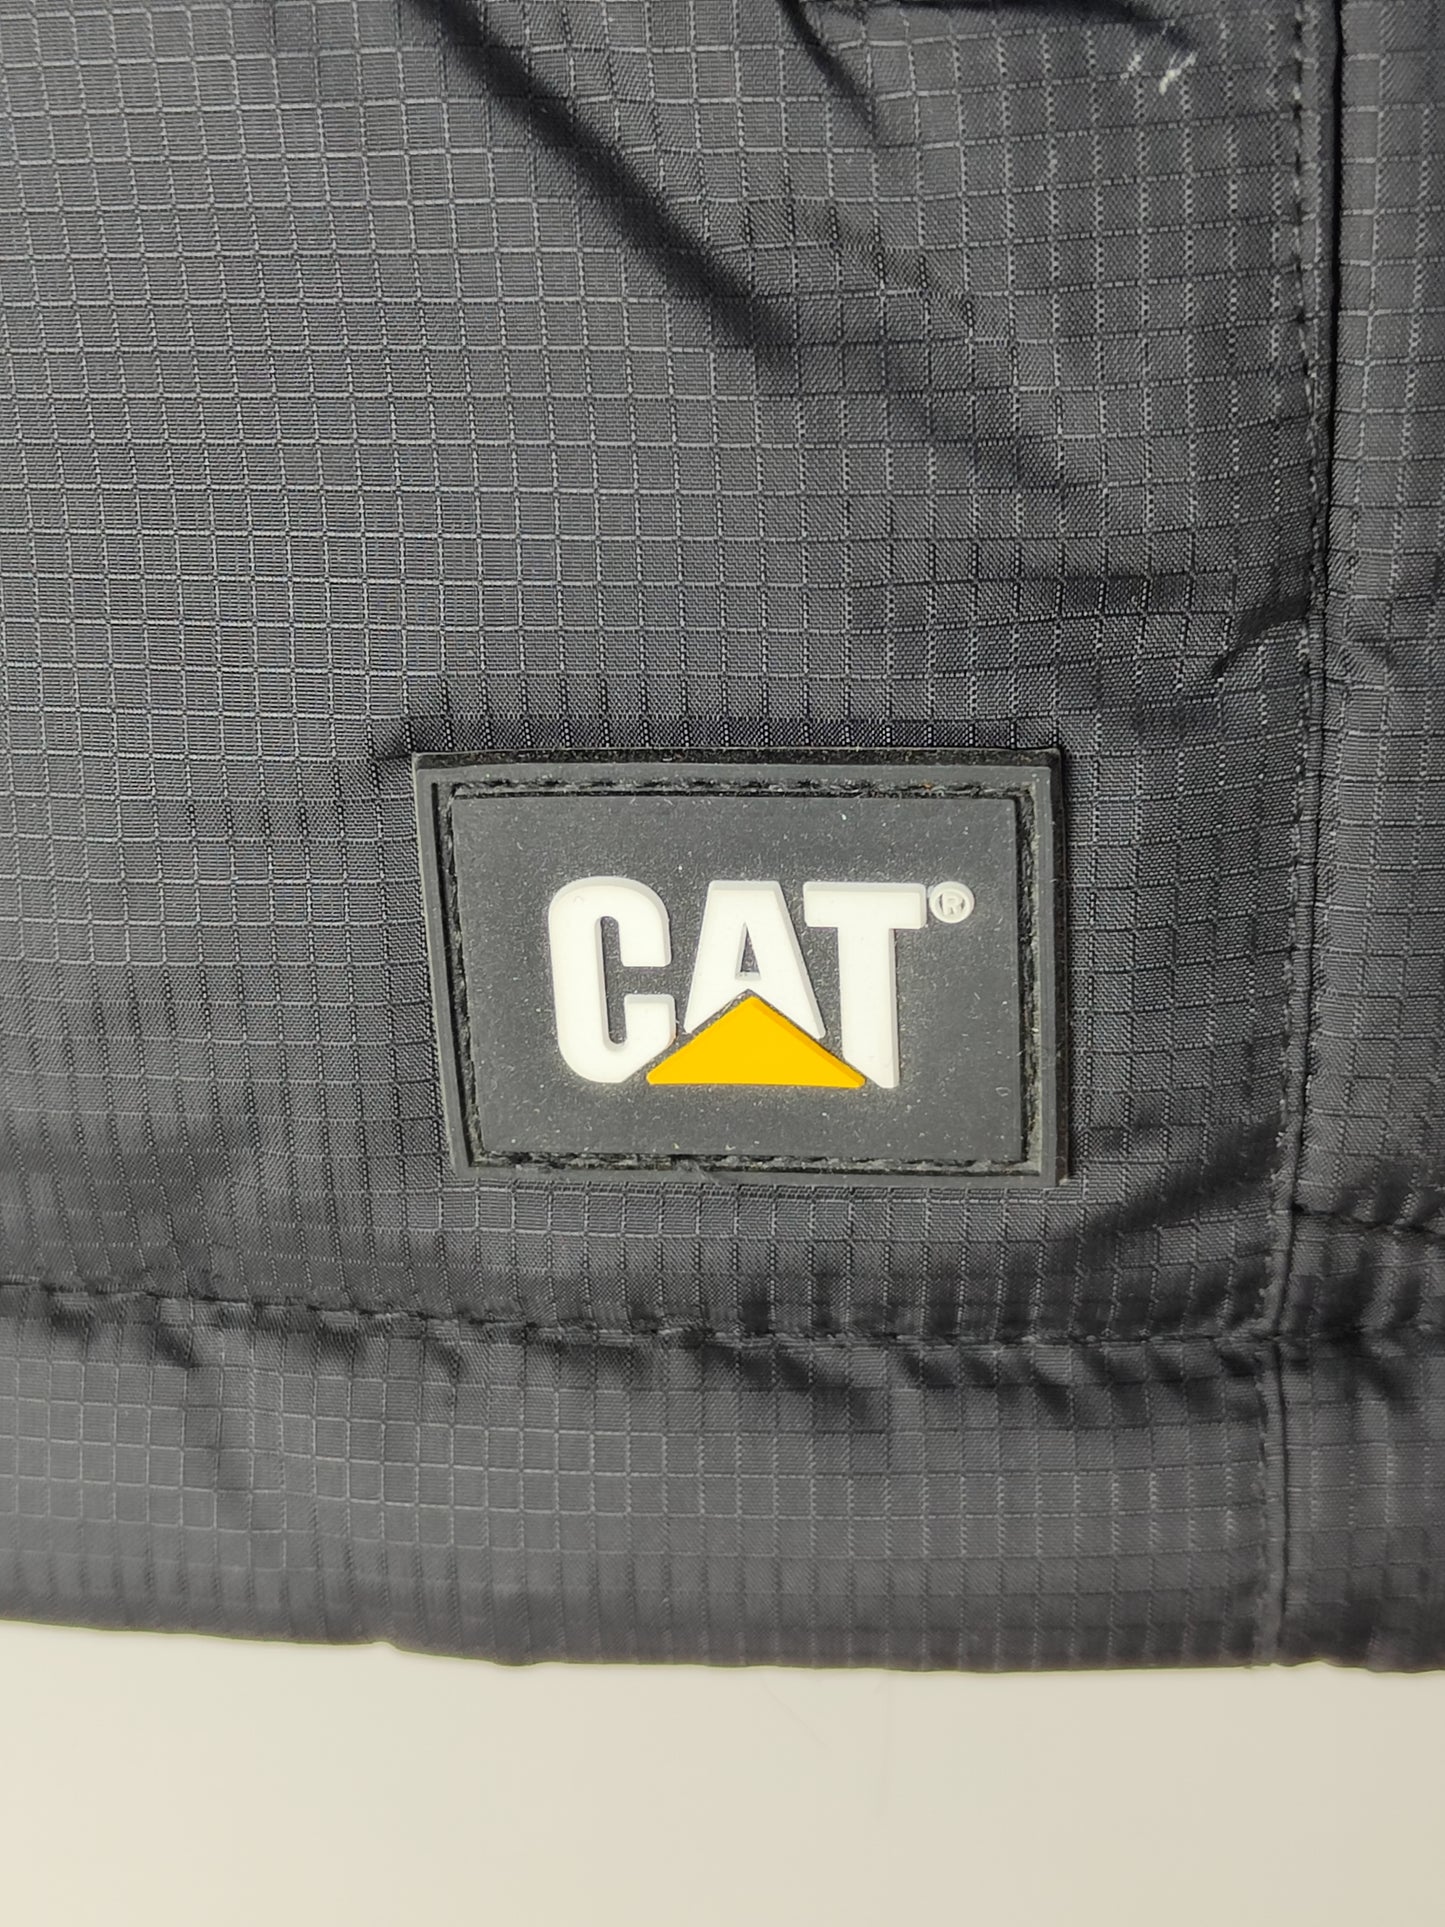 CAT Men's Gilet body warmer Insulated Work Trade Vest XL